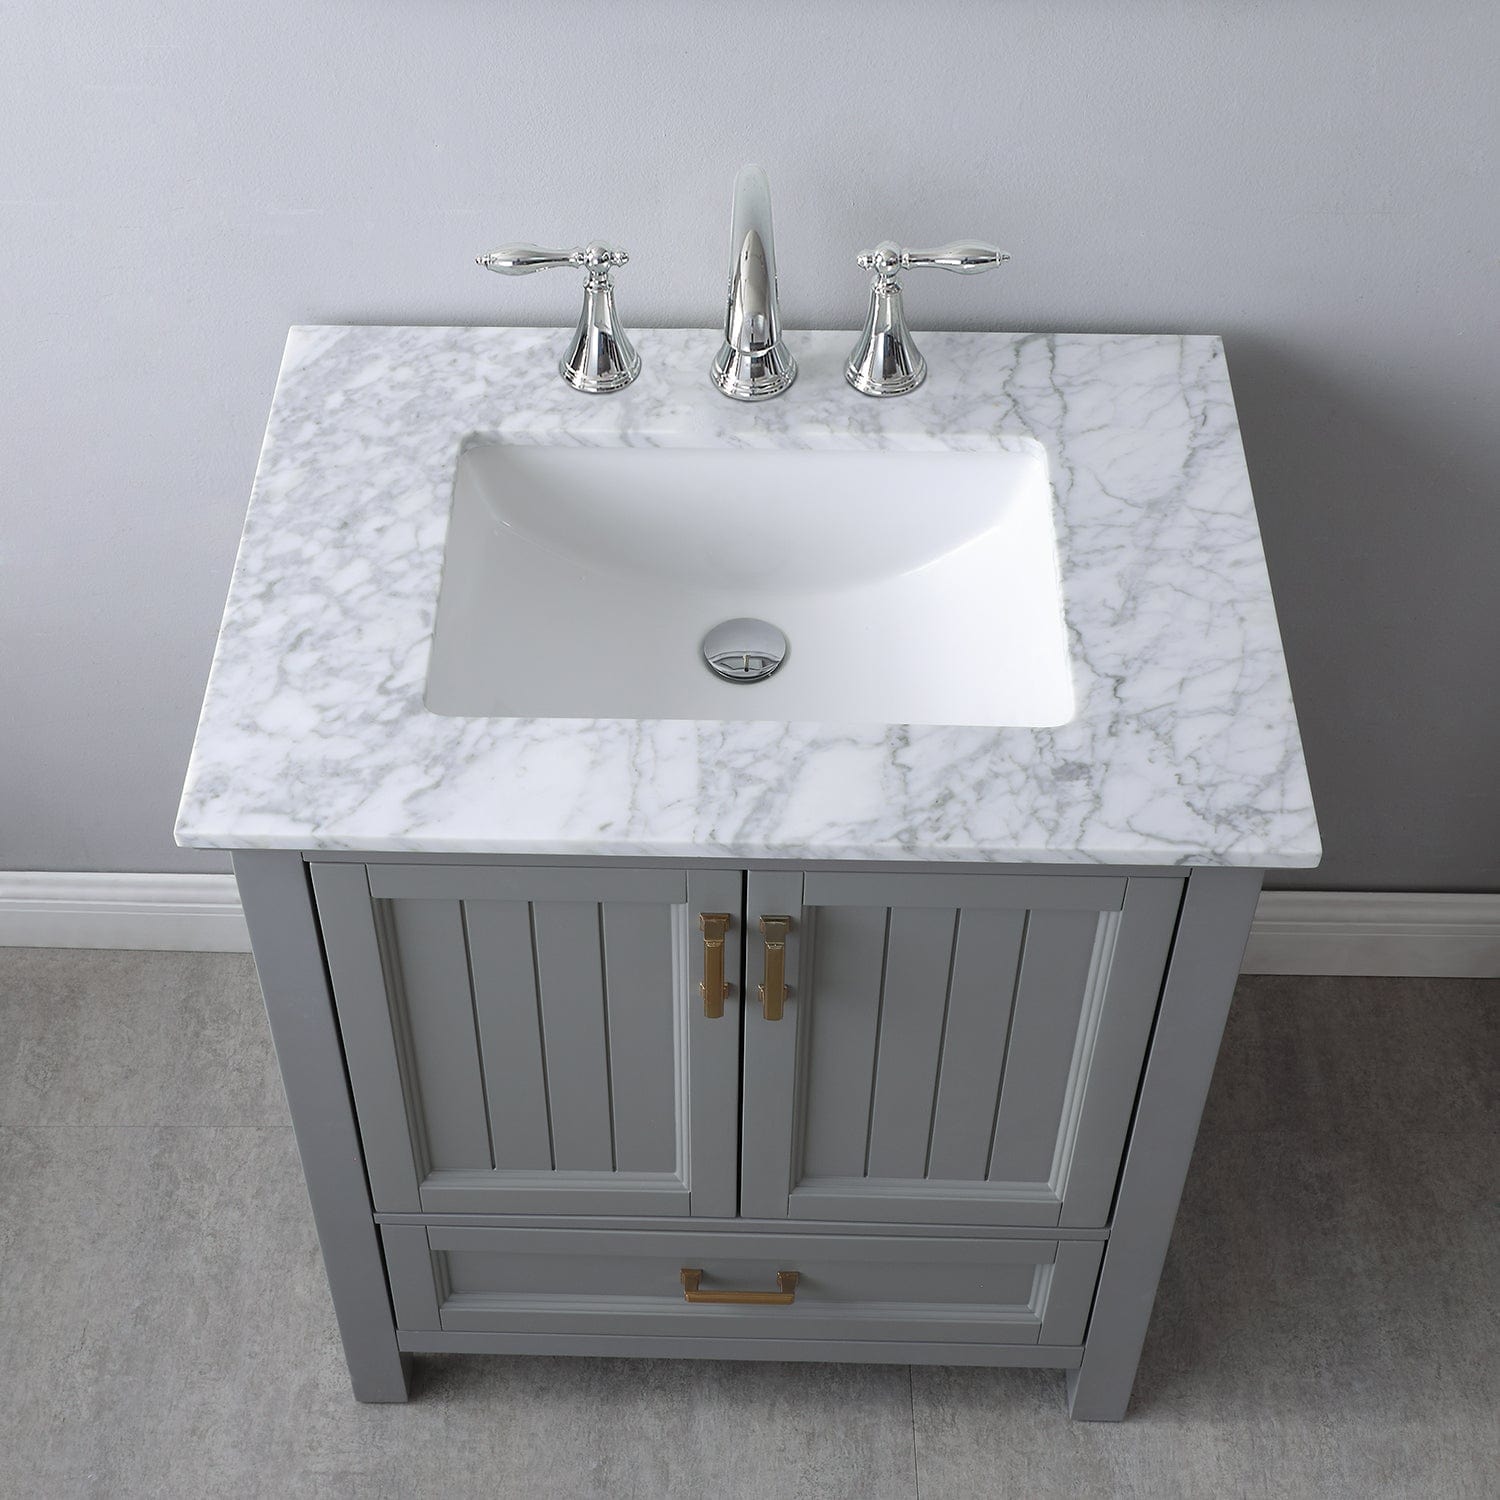 Altair Isla 30" Single Bathroom Vanity Set in Gray and Carrara White Marble Countertop with Mirror 538030-GR-CA - Molaix631112970716Vanity538030-GR-CA